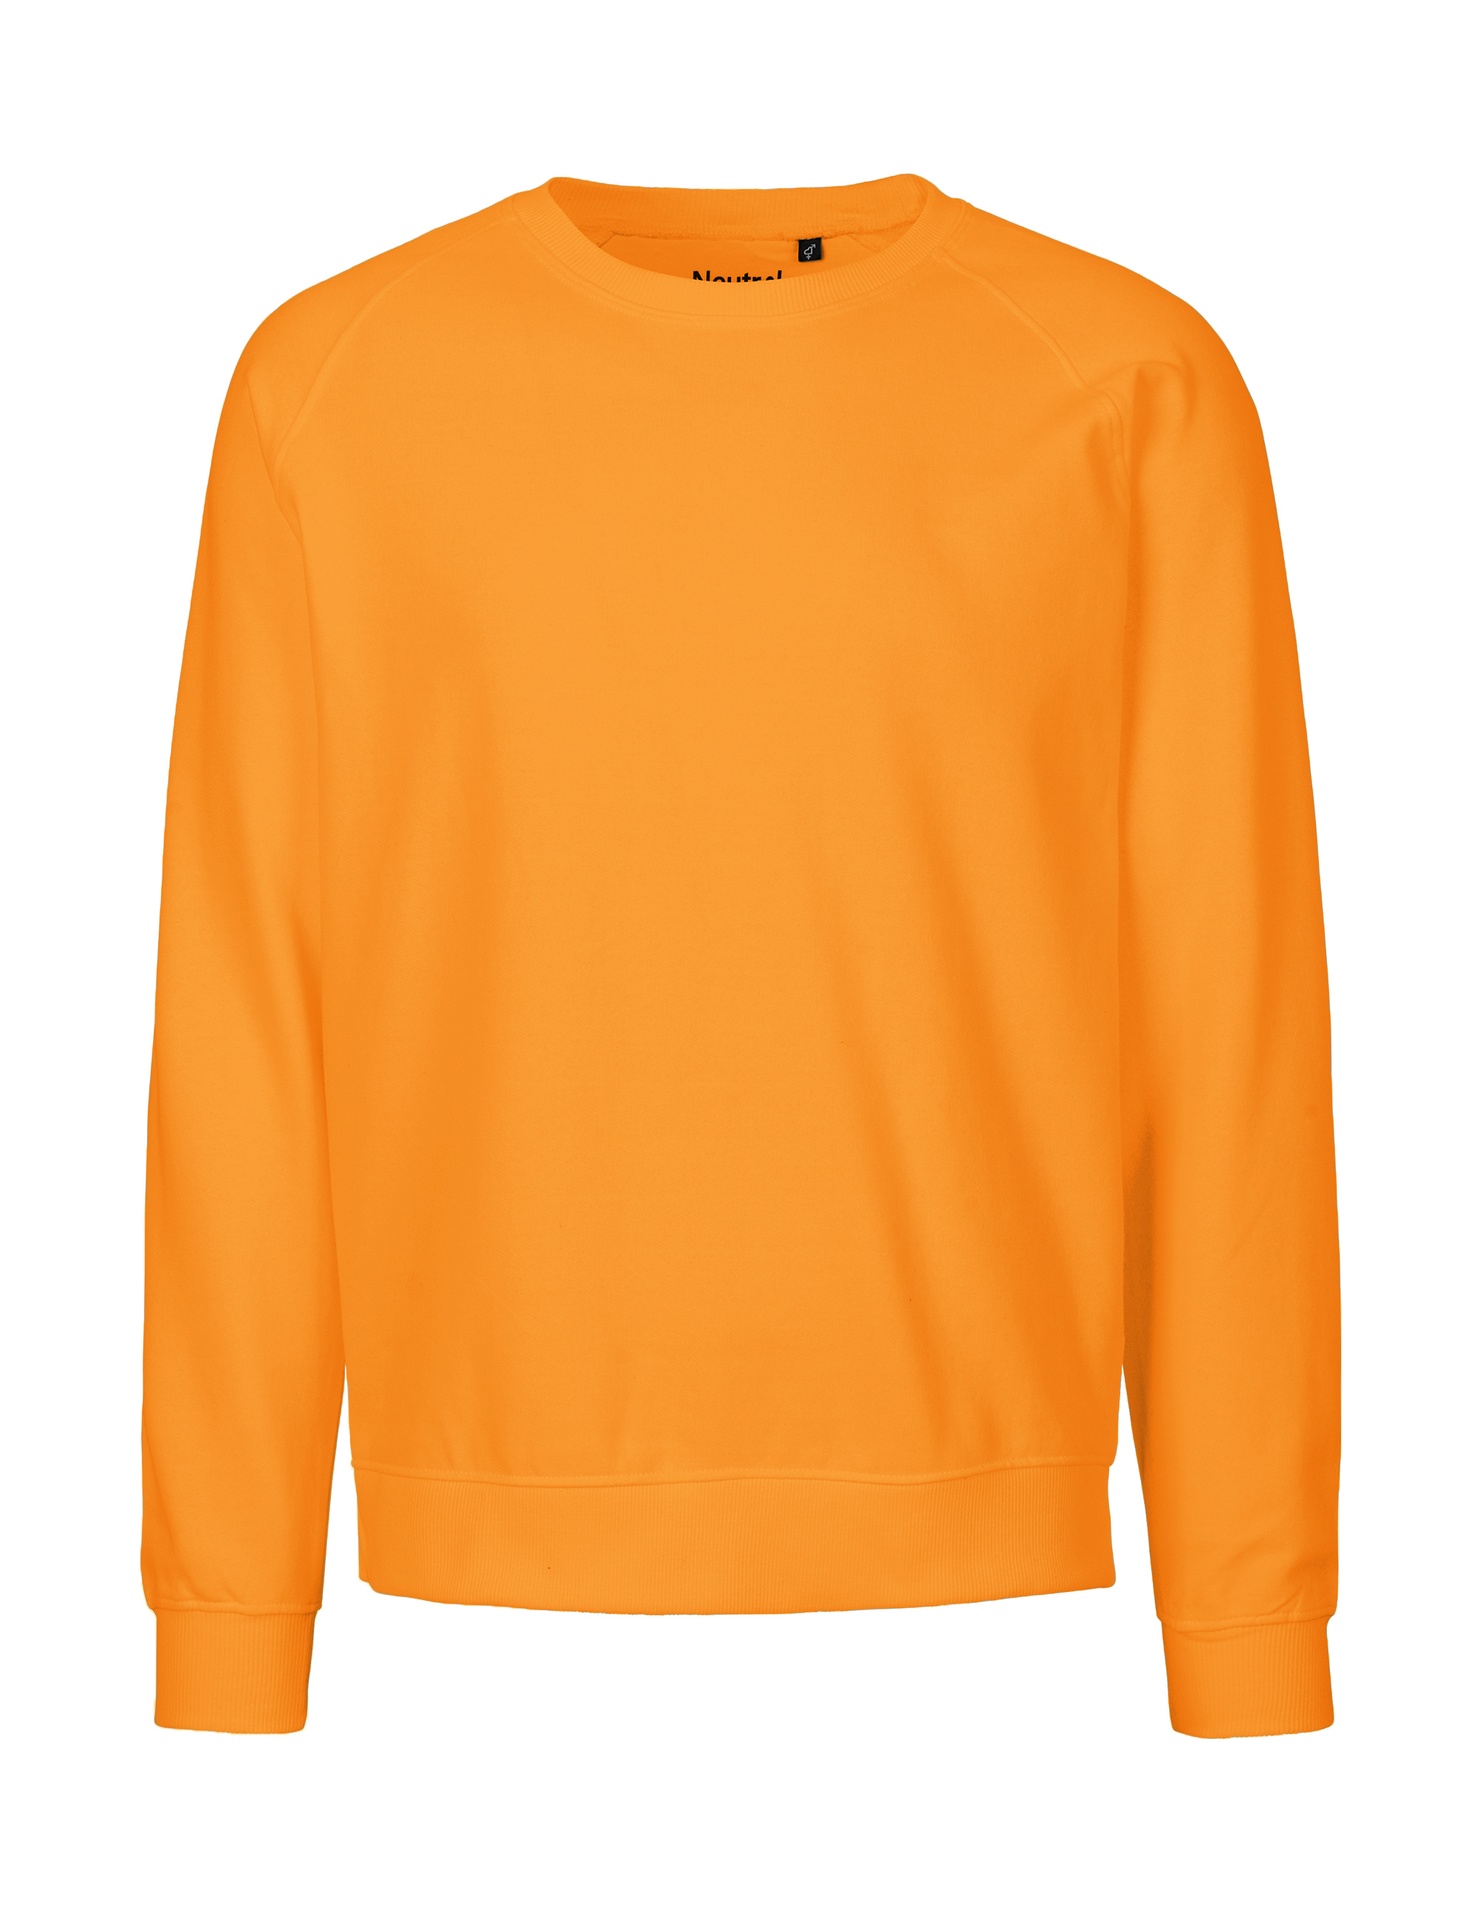 [PR/02793] Unisex Sweatshirt (Okay Orange 31, 3XL)